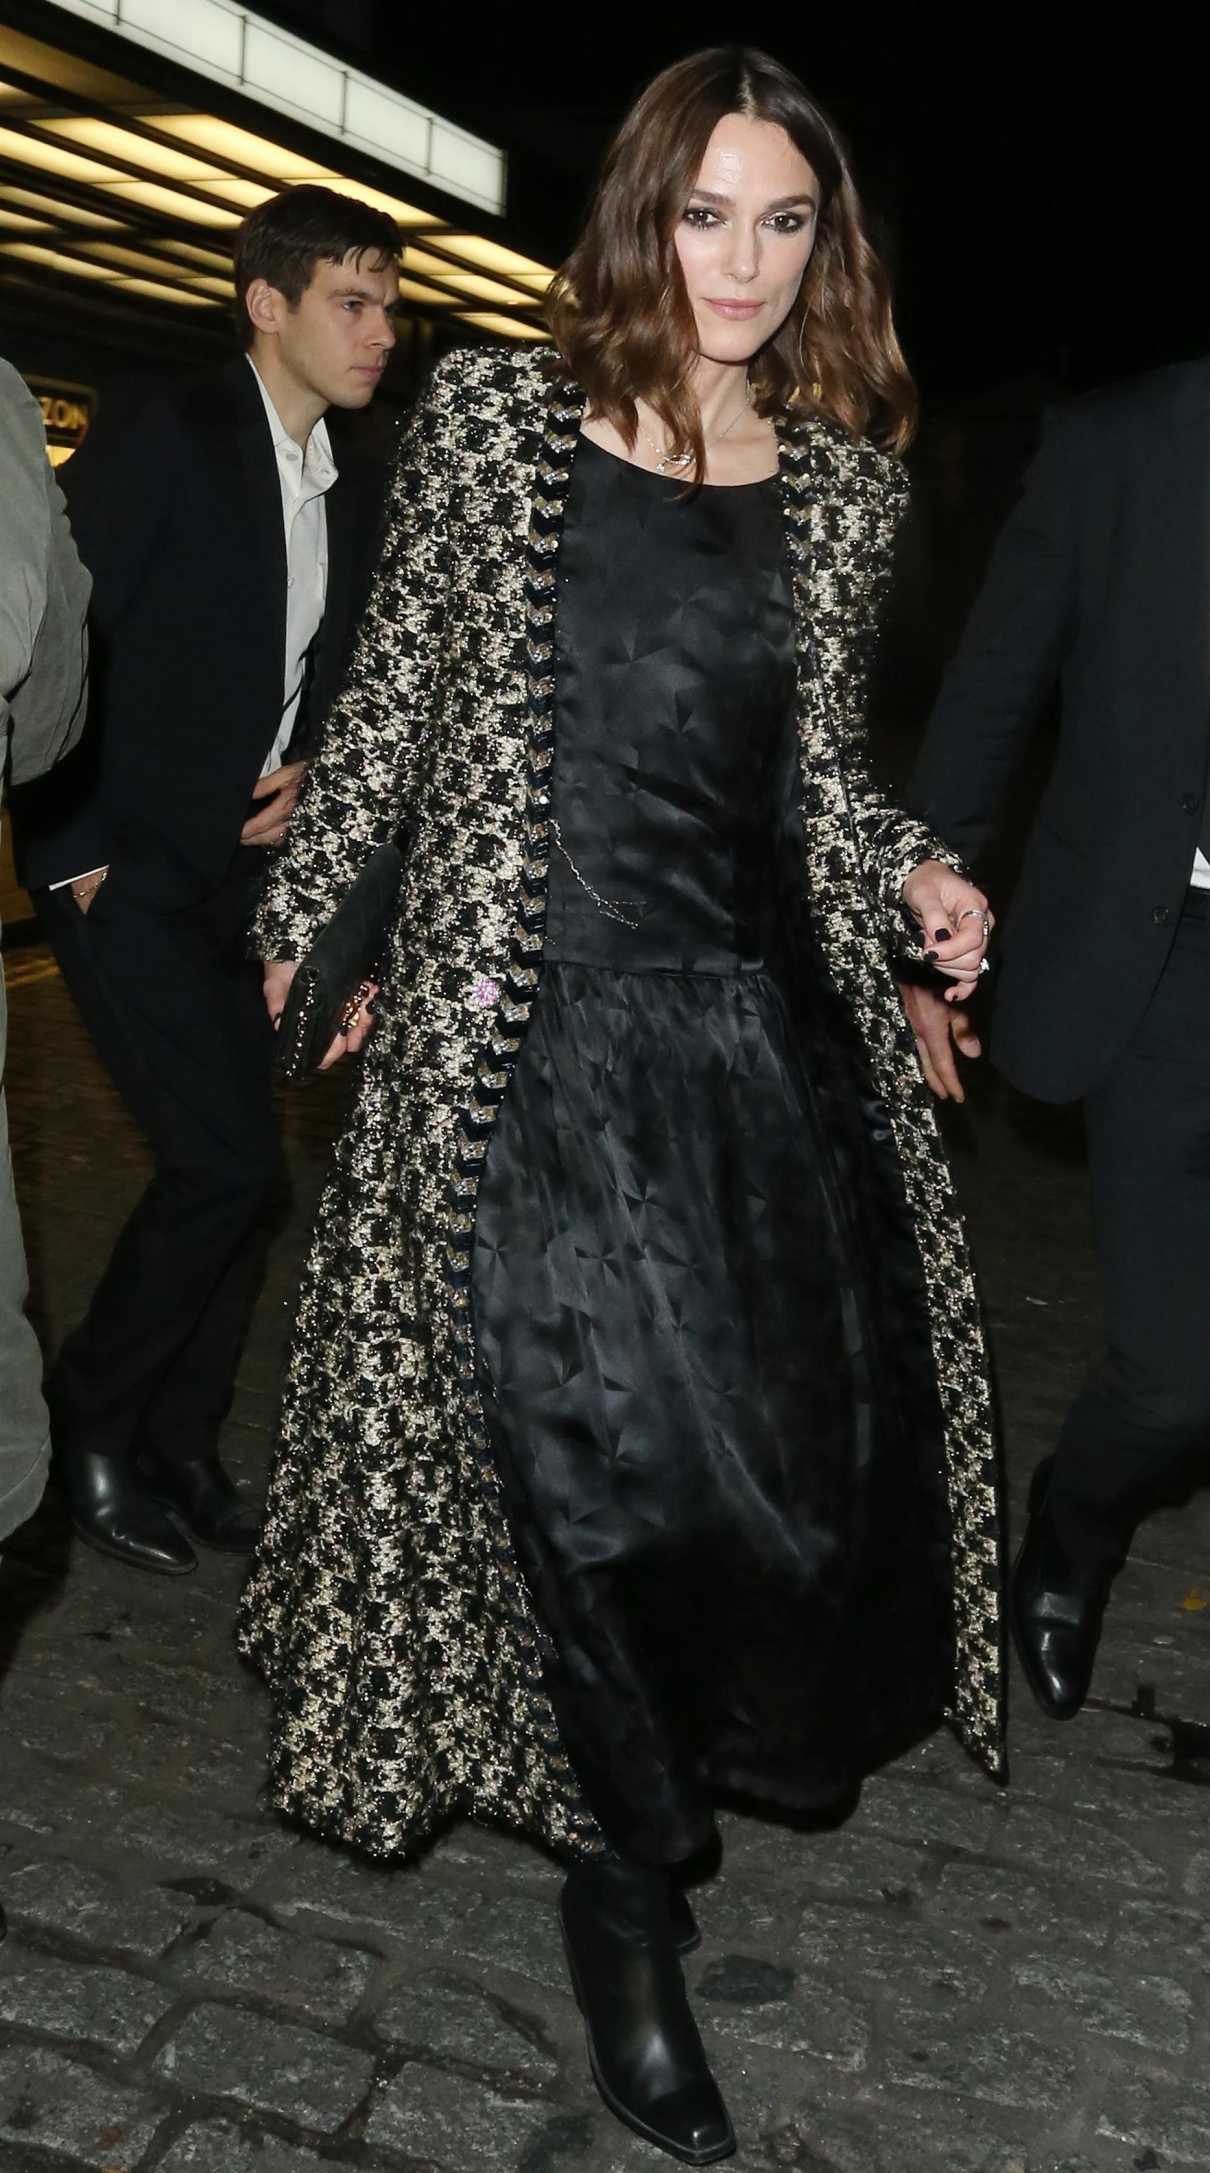 Keira Knightley in a Black Dress